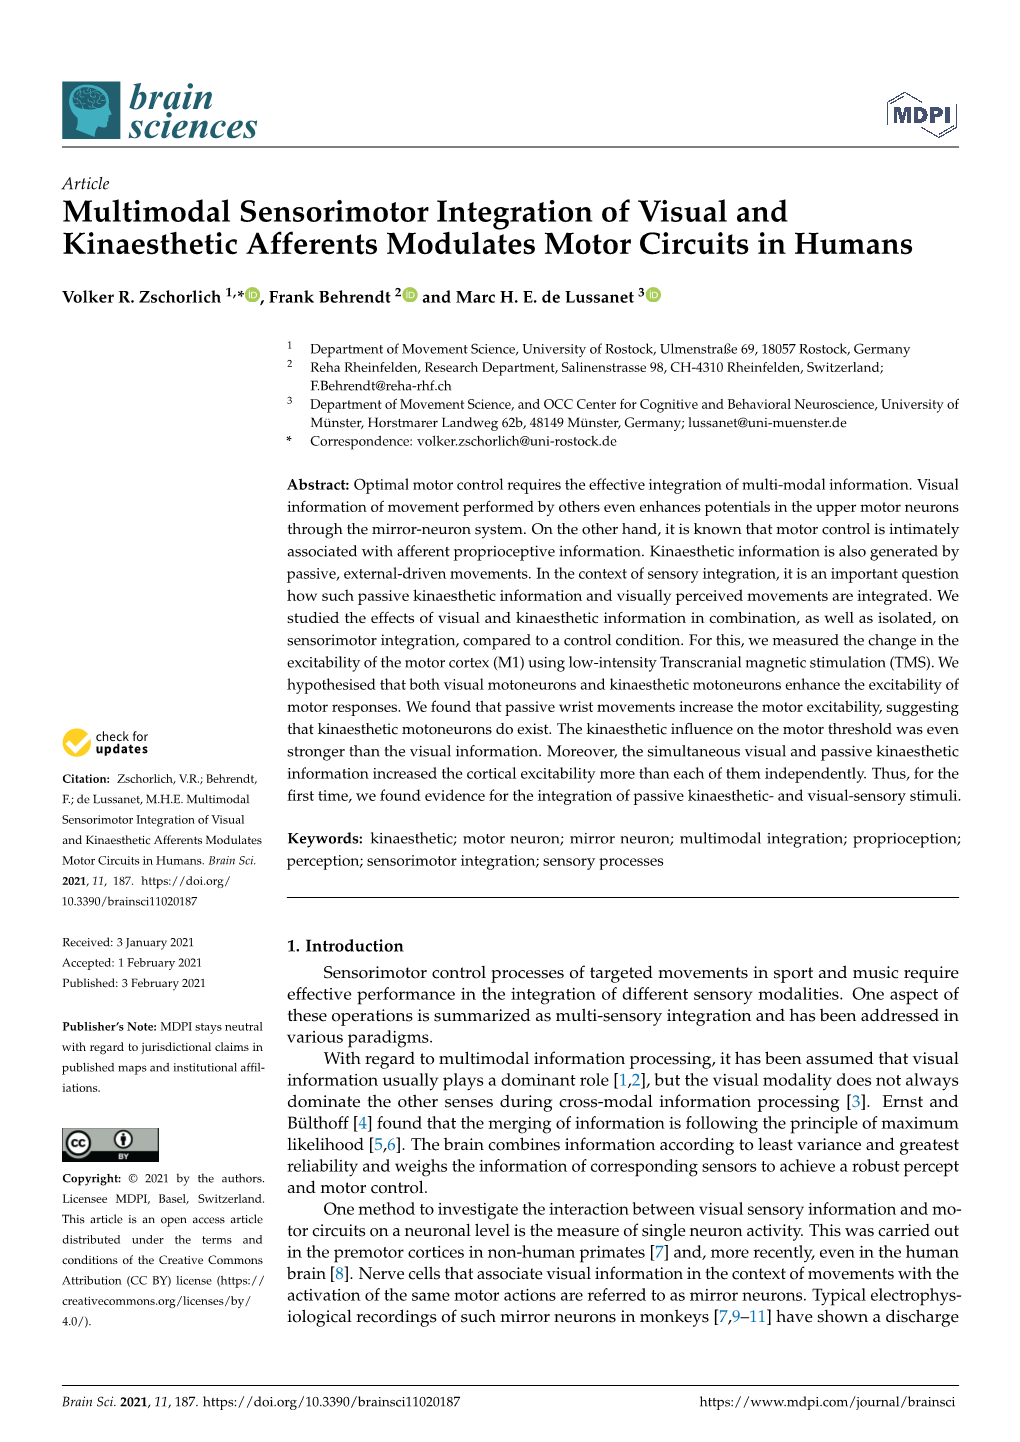 Multimodal Sensorimotor Integration of Visual and Kinaesthetic Afferents Modulates Motor Circuits in Humans